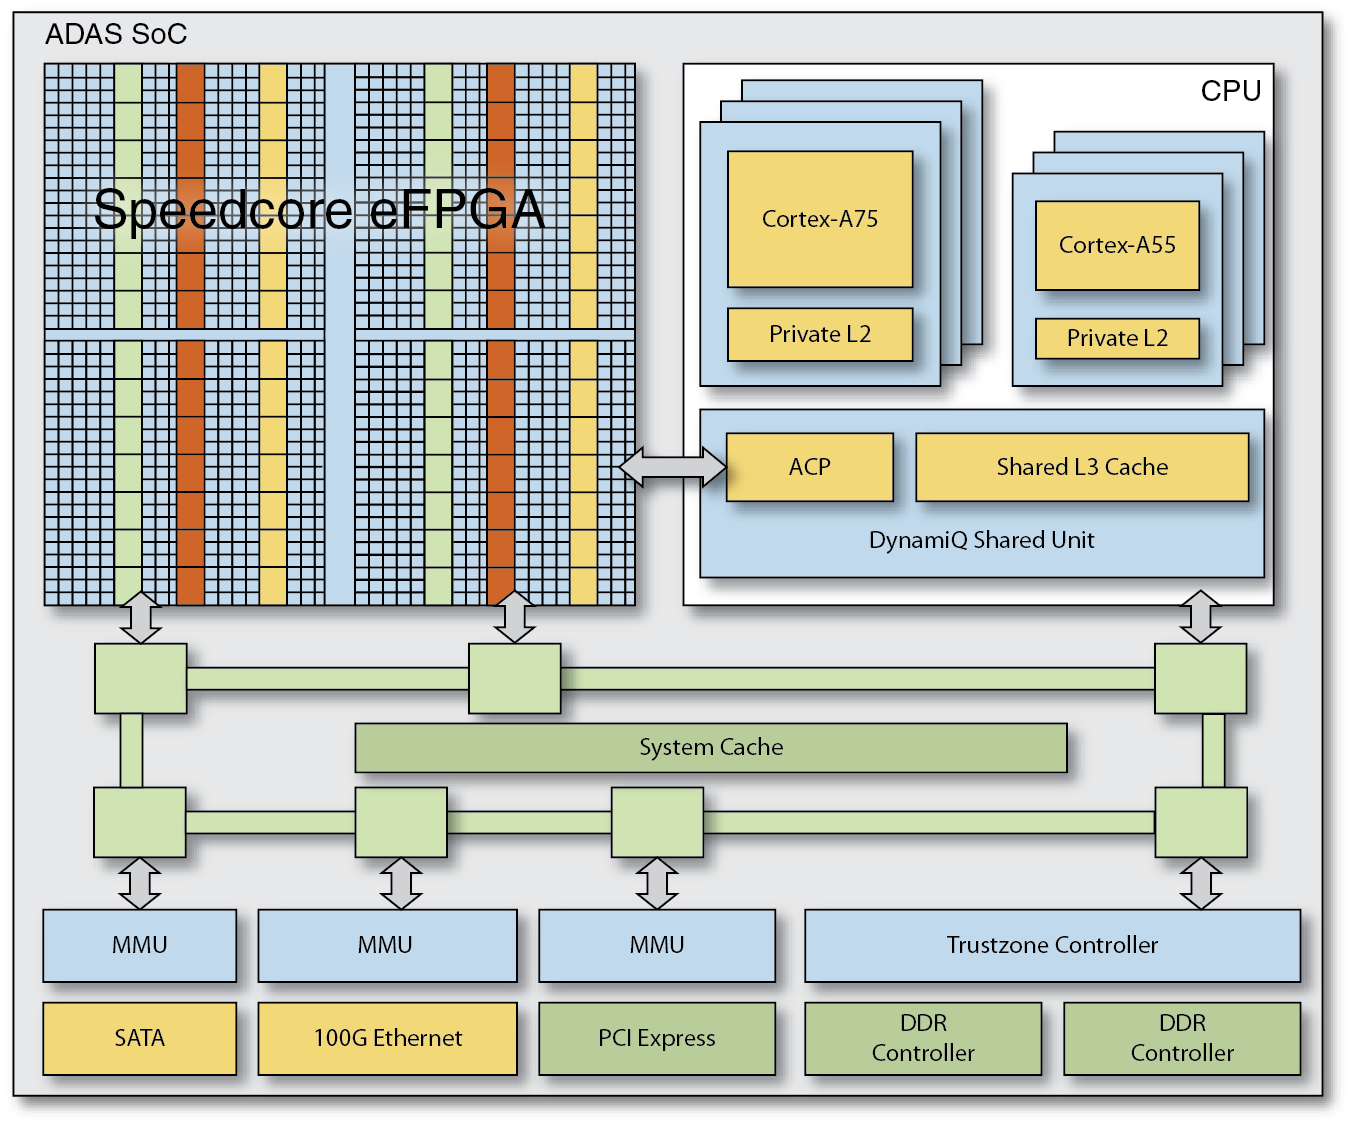 Speedcore eFPGA SoC